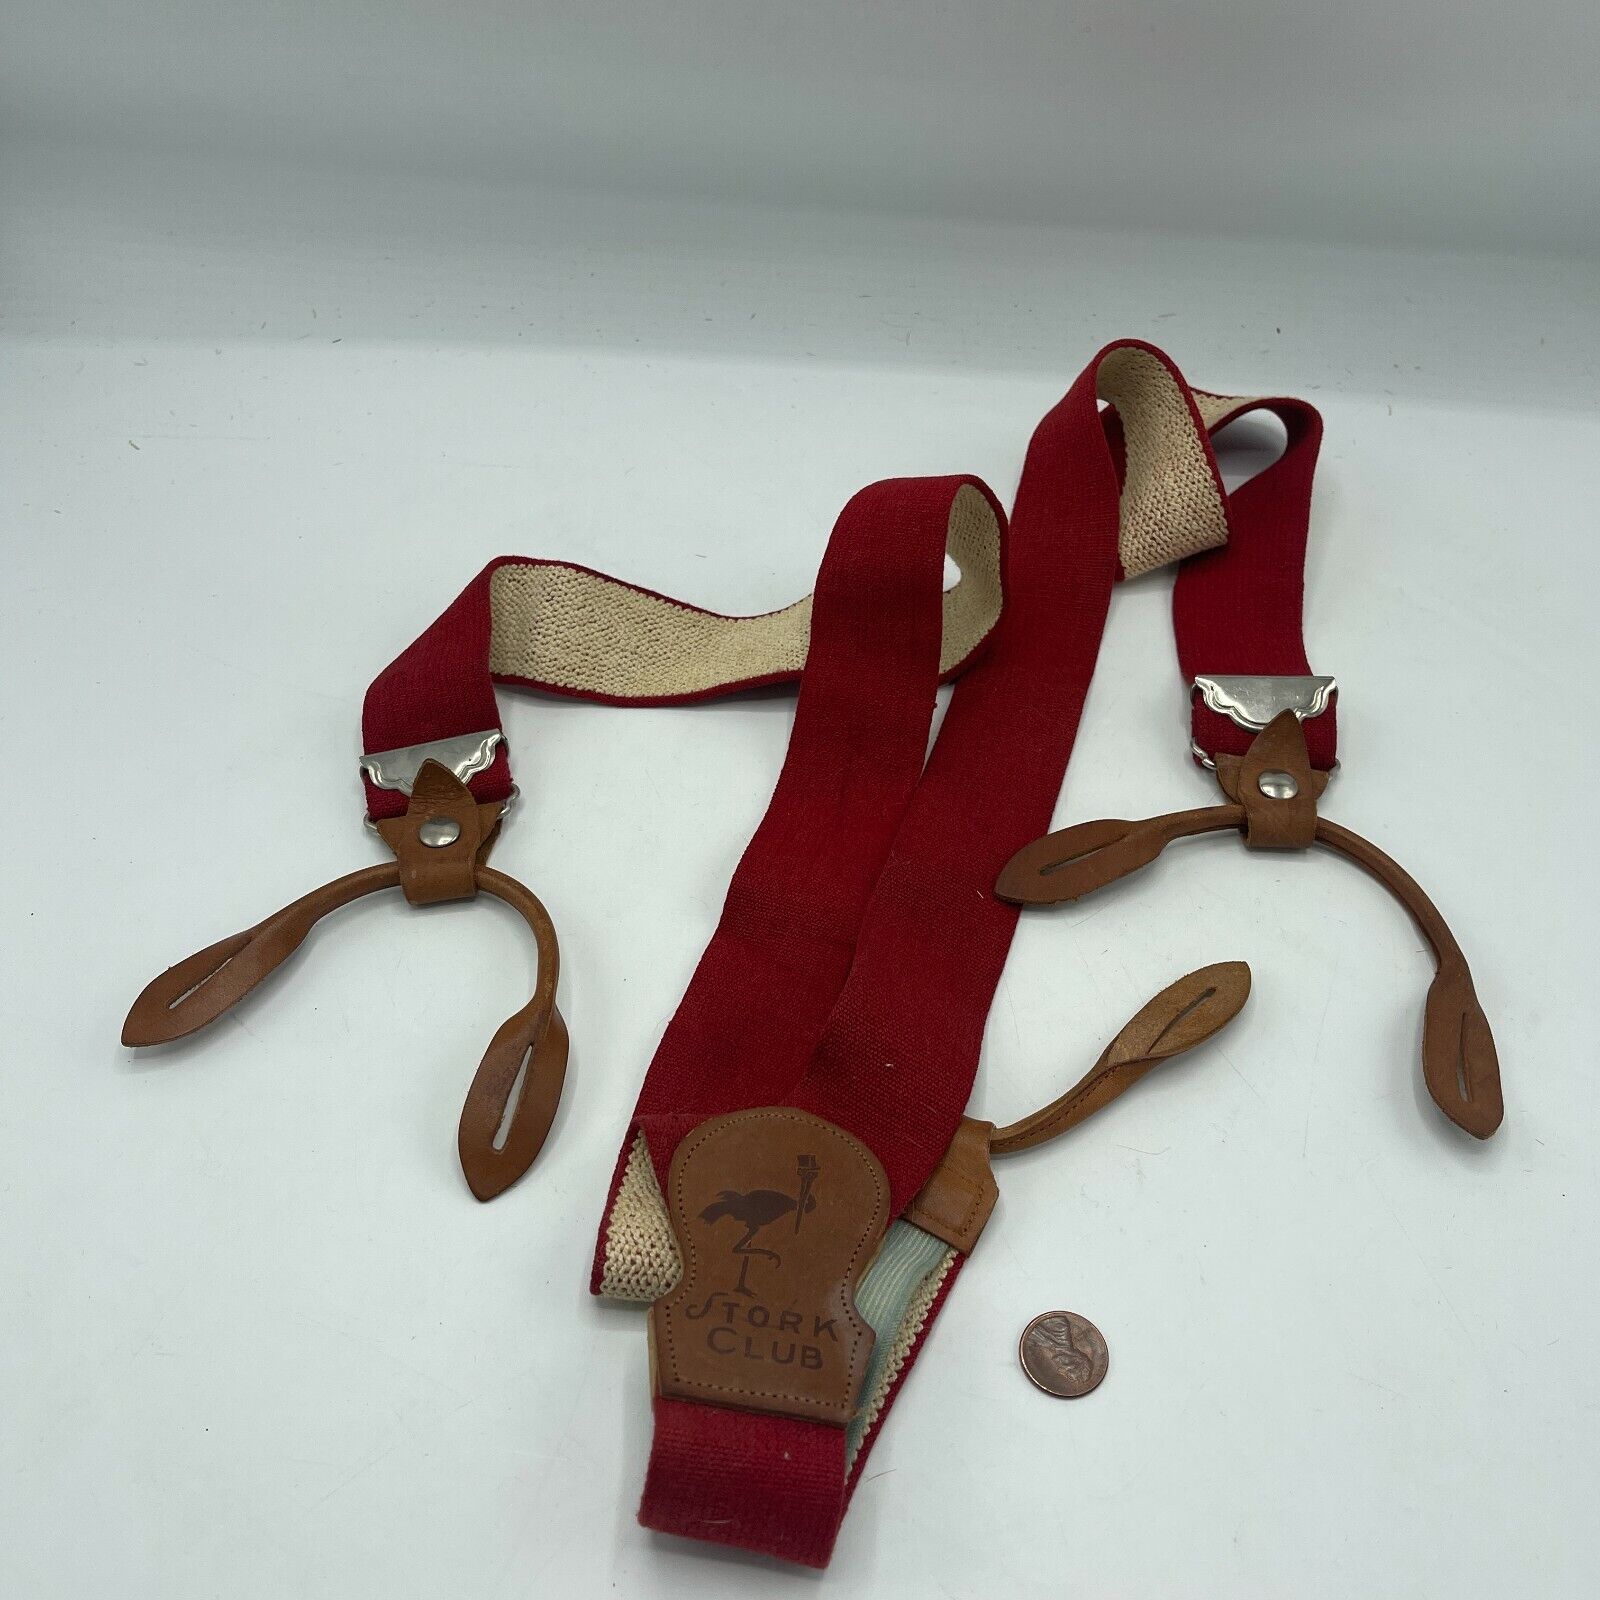 Vintage Rare Stork Club Men's Braces Suspenders Red 36" Leather & Elastic